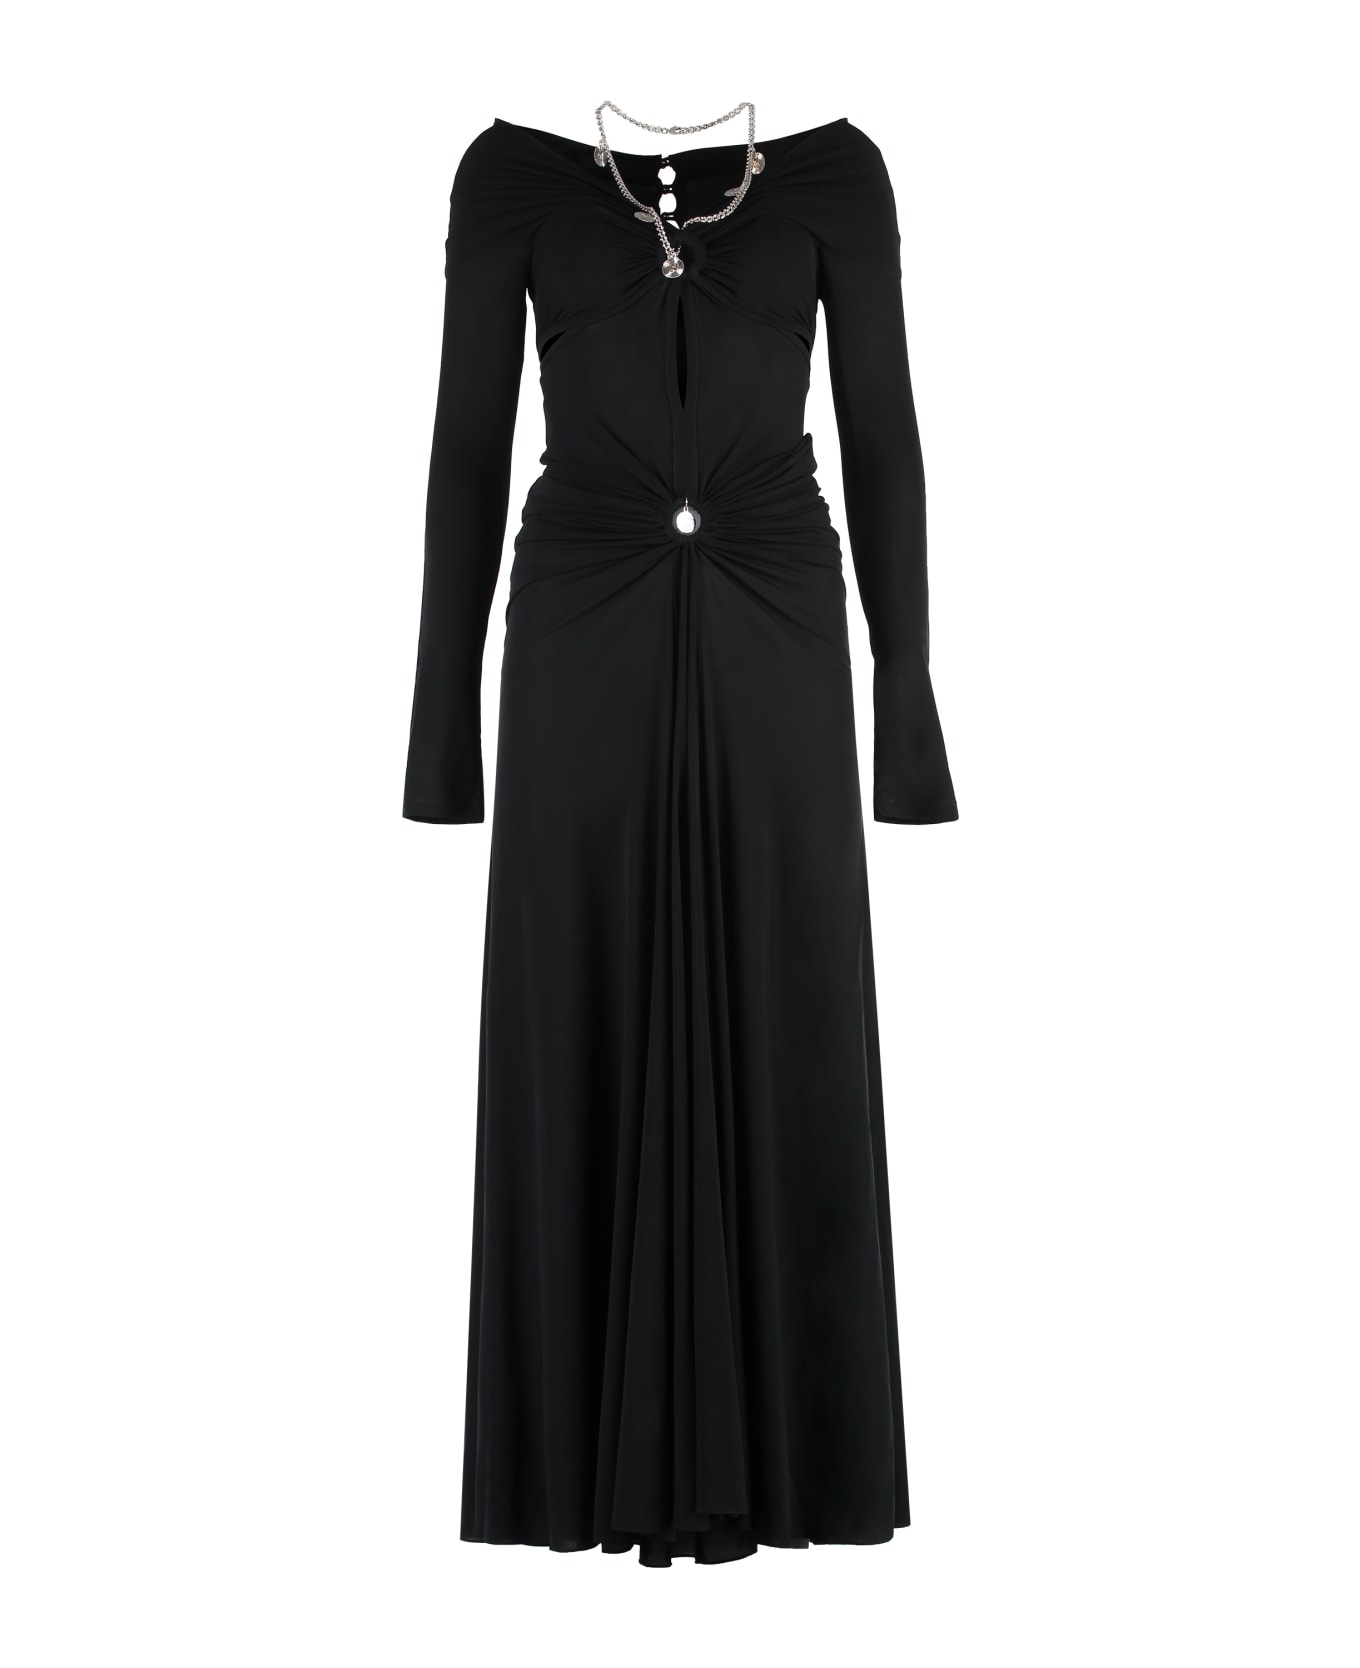 Paco Rabanne Draped Jersey Dress - black